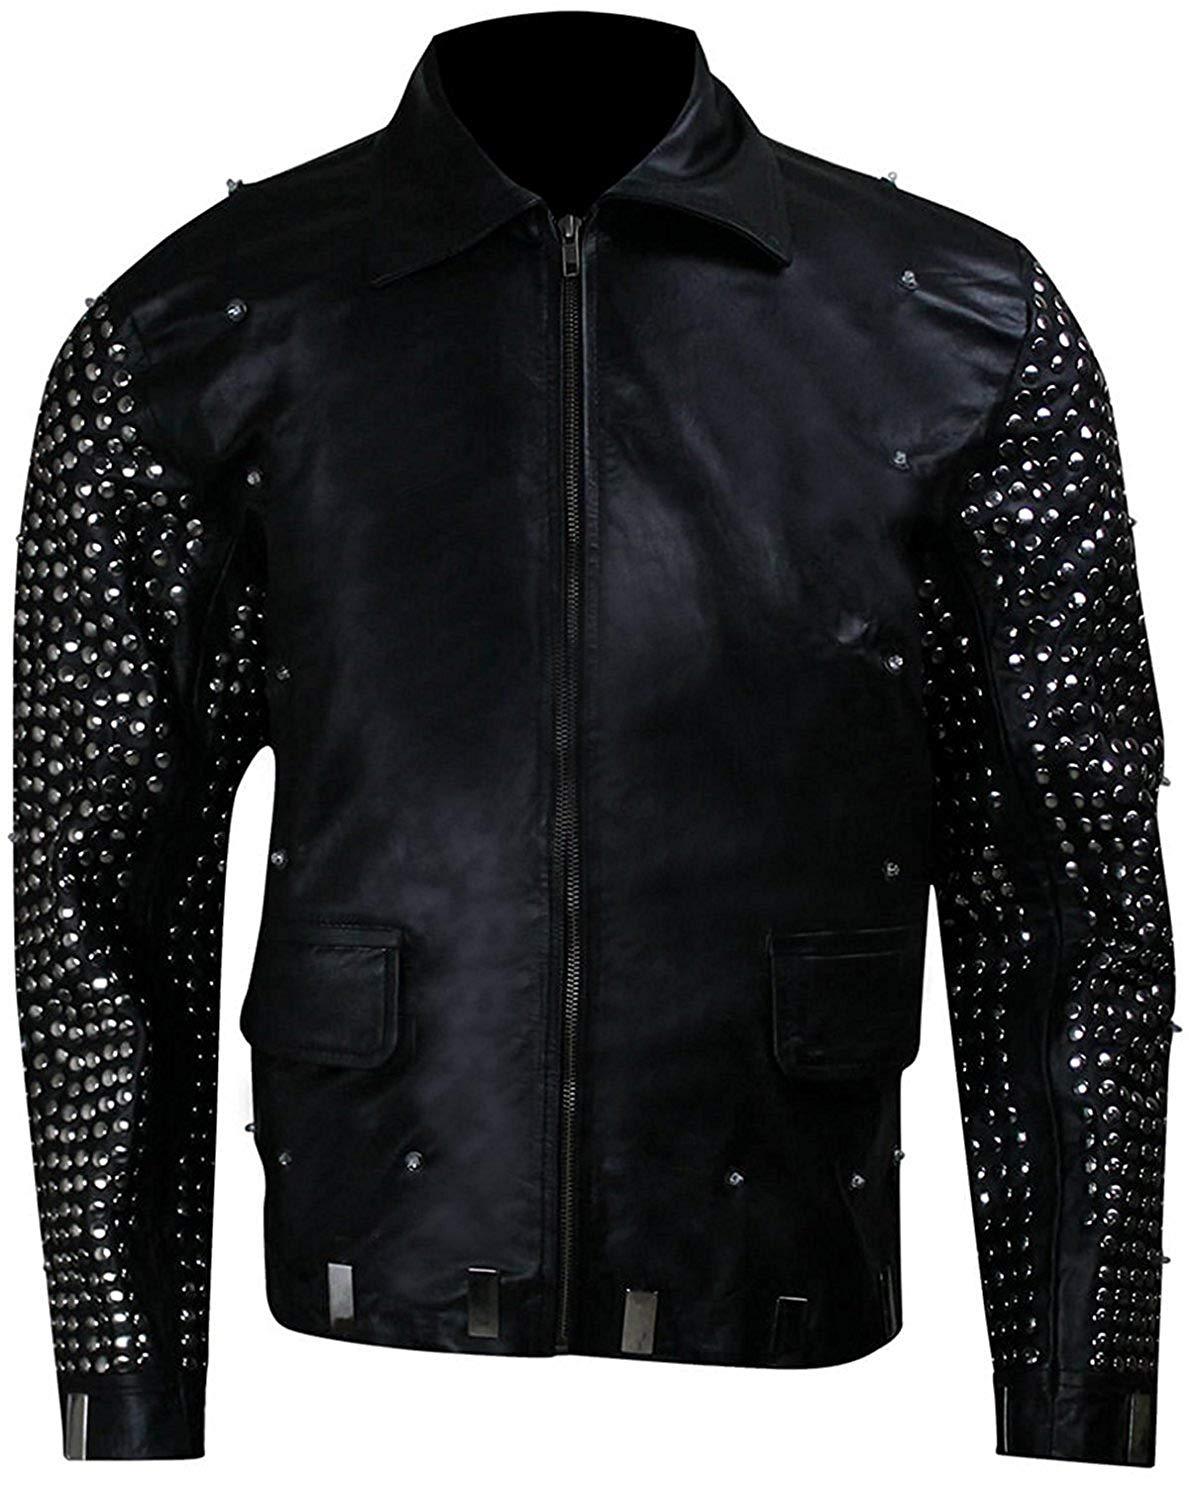 Chris Jericho (Y2J) WWE Superstar Light Up Studded Black Winter Leather ...